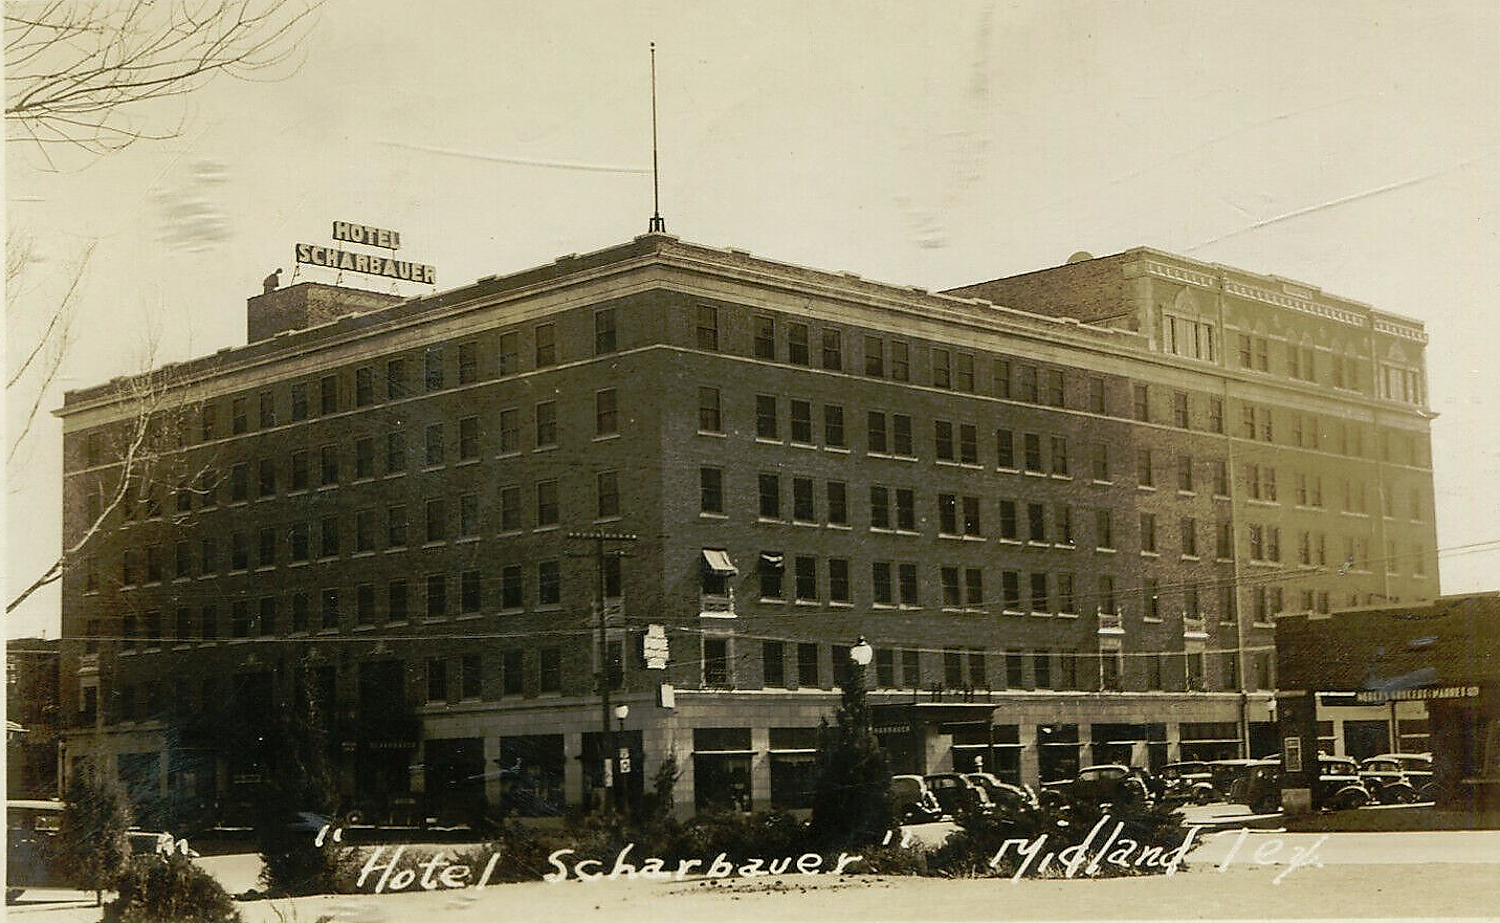 Hotel Scharbauer in Midland in 1940